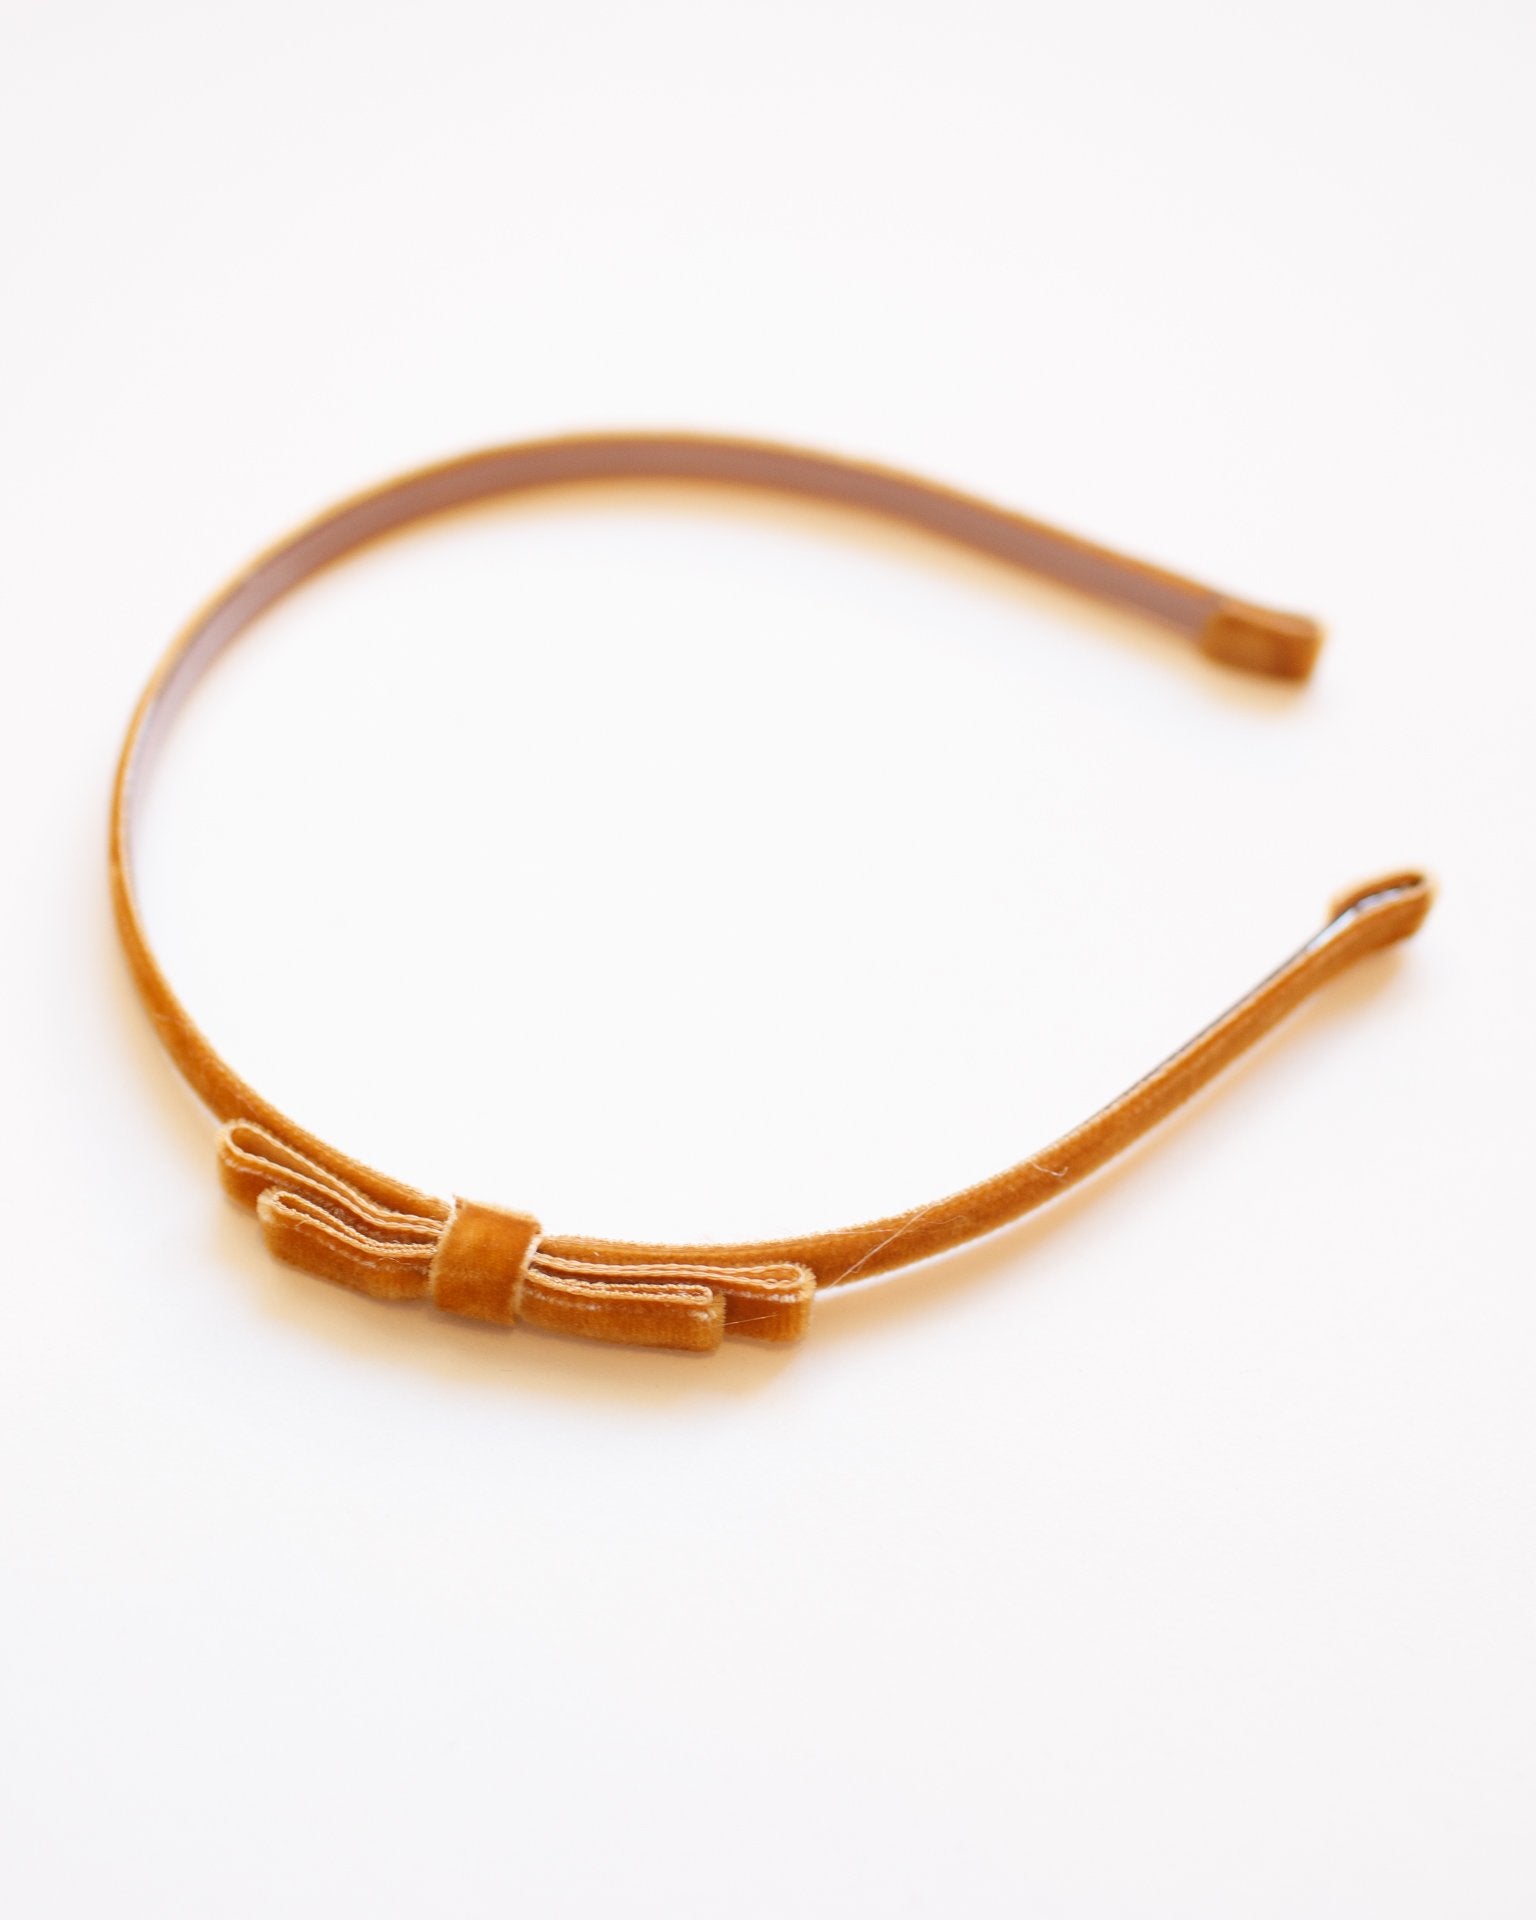 Little lululuvs accessories velvet headband in copper